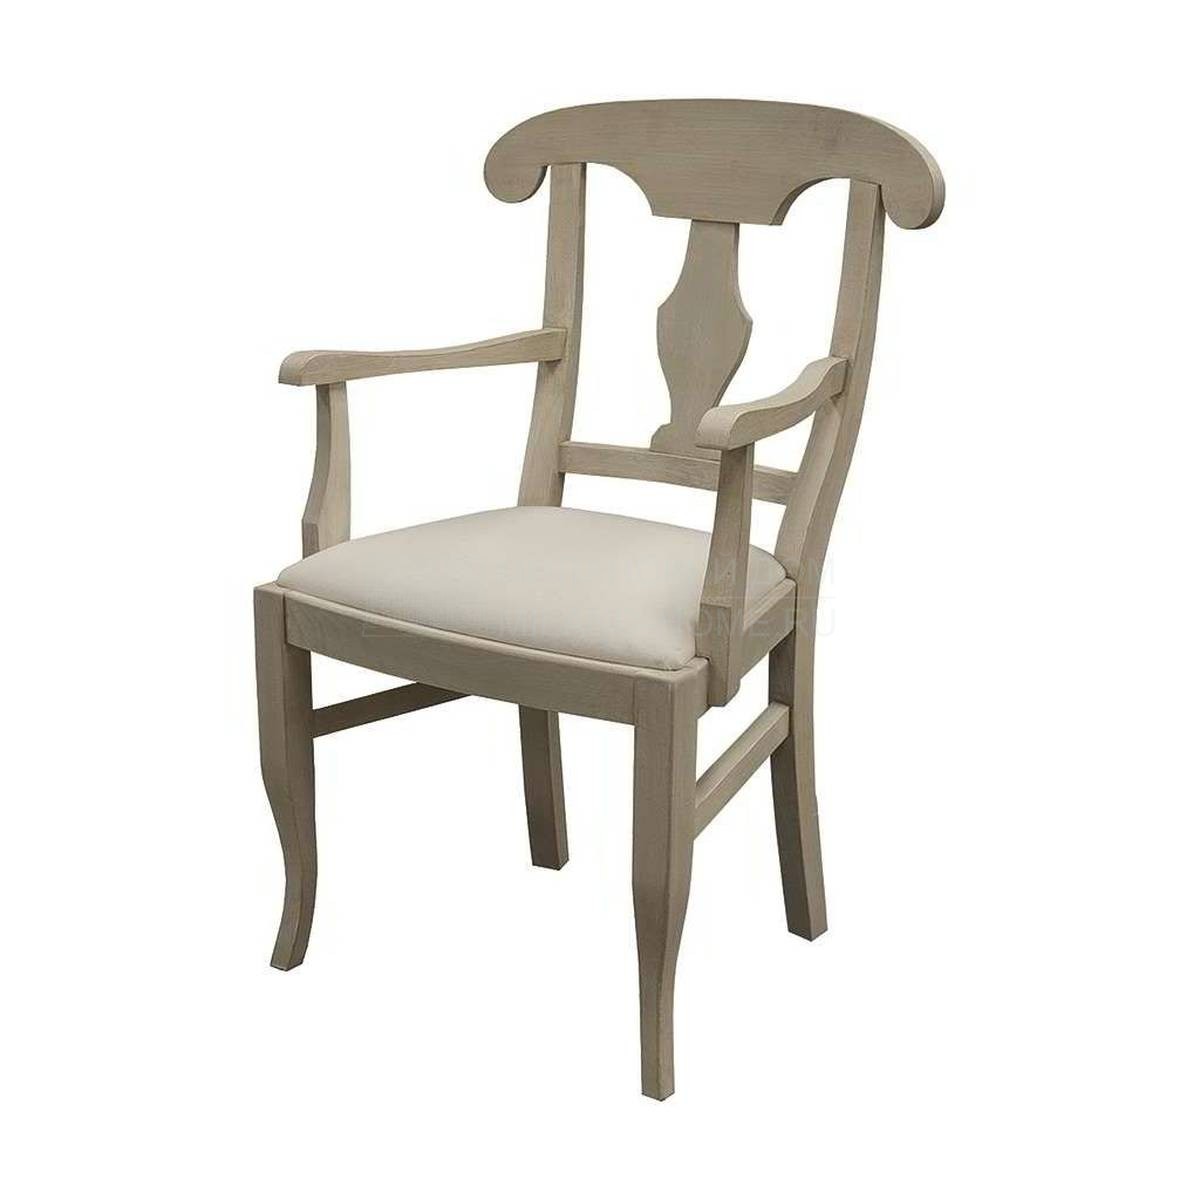 Полукресло M-3304 chair из Испании фабрики GUADARTE